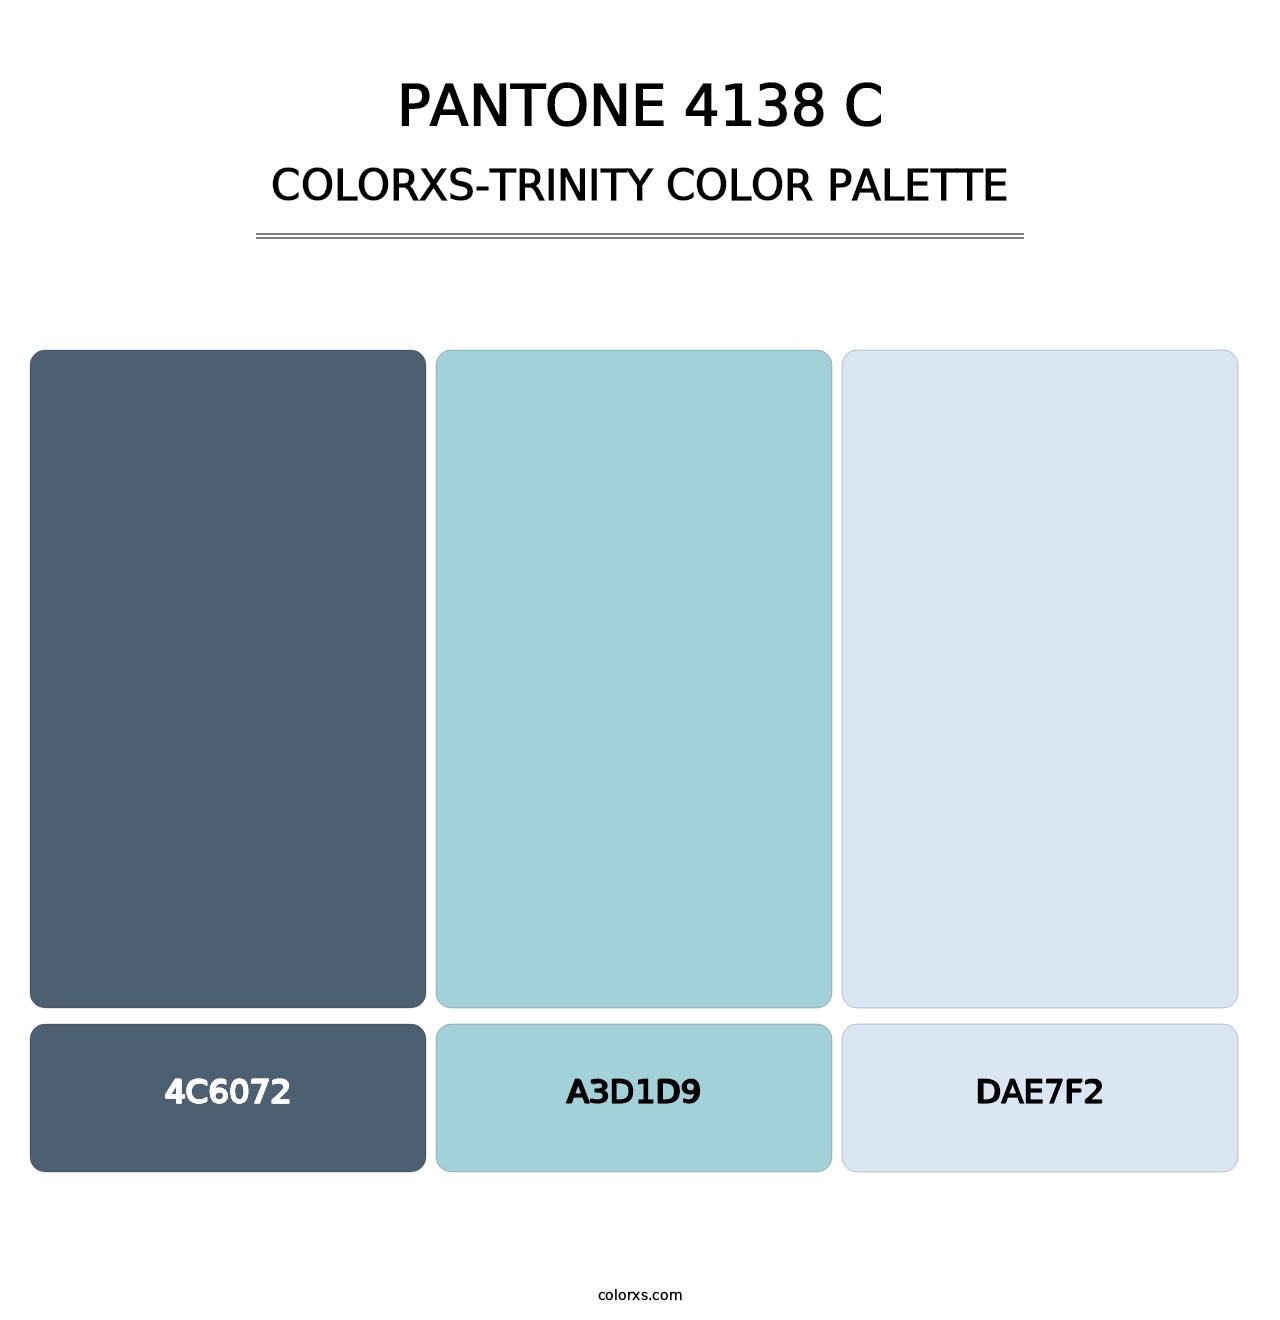 PANTONE 4138 C - Colorxs Trinity Palette